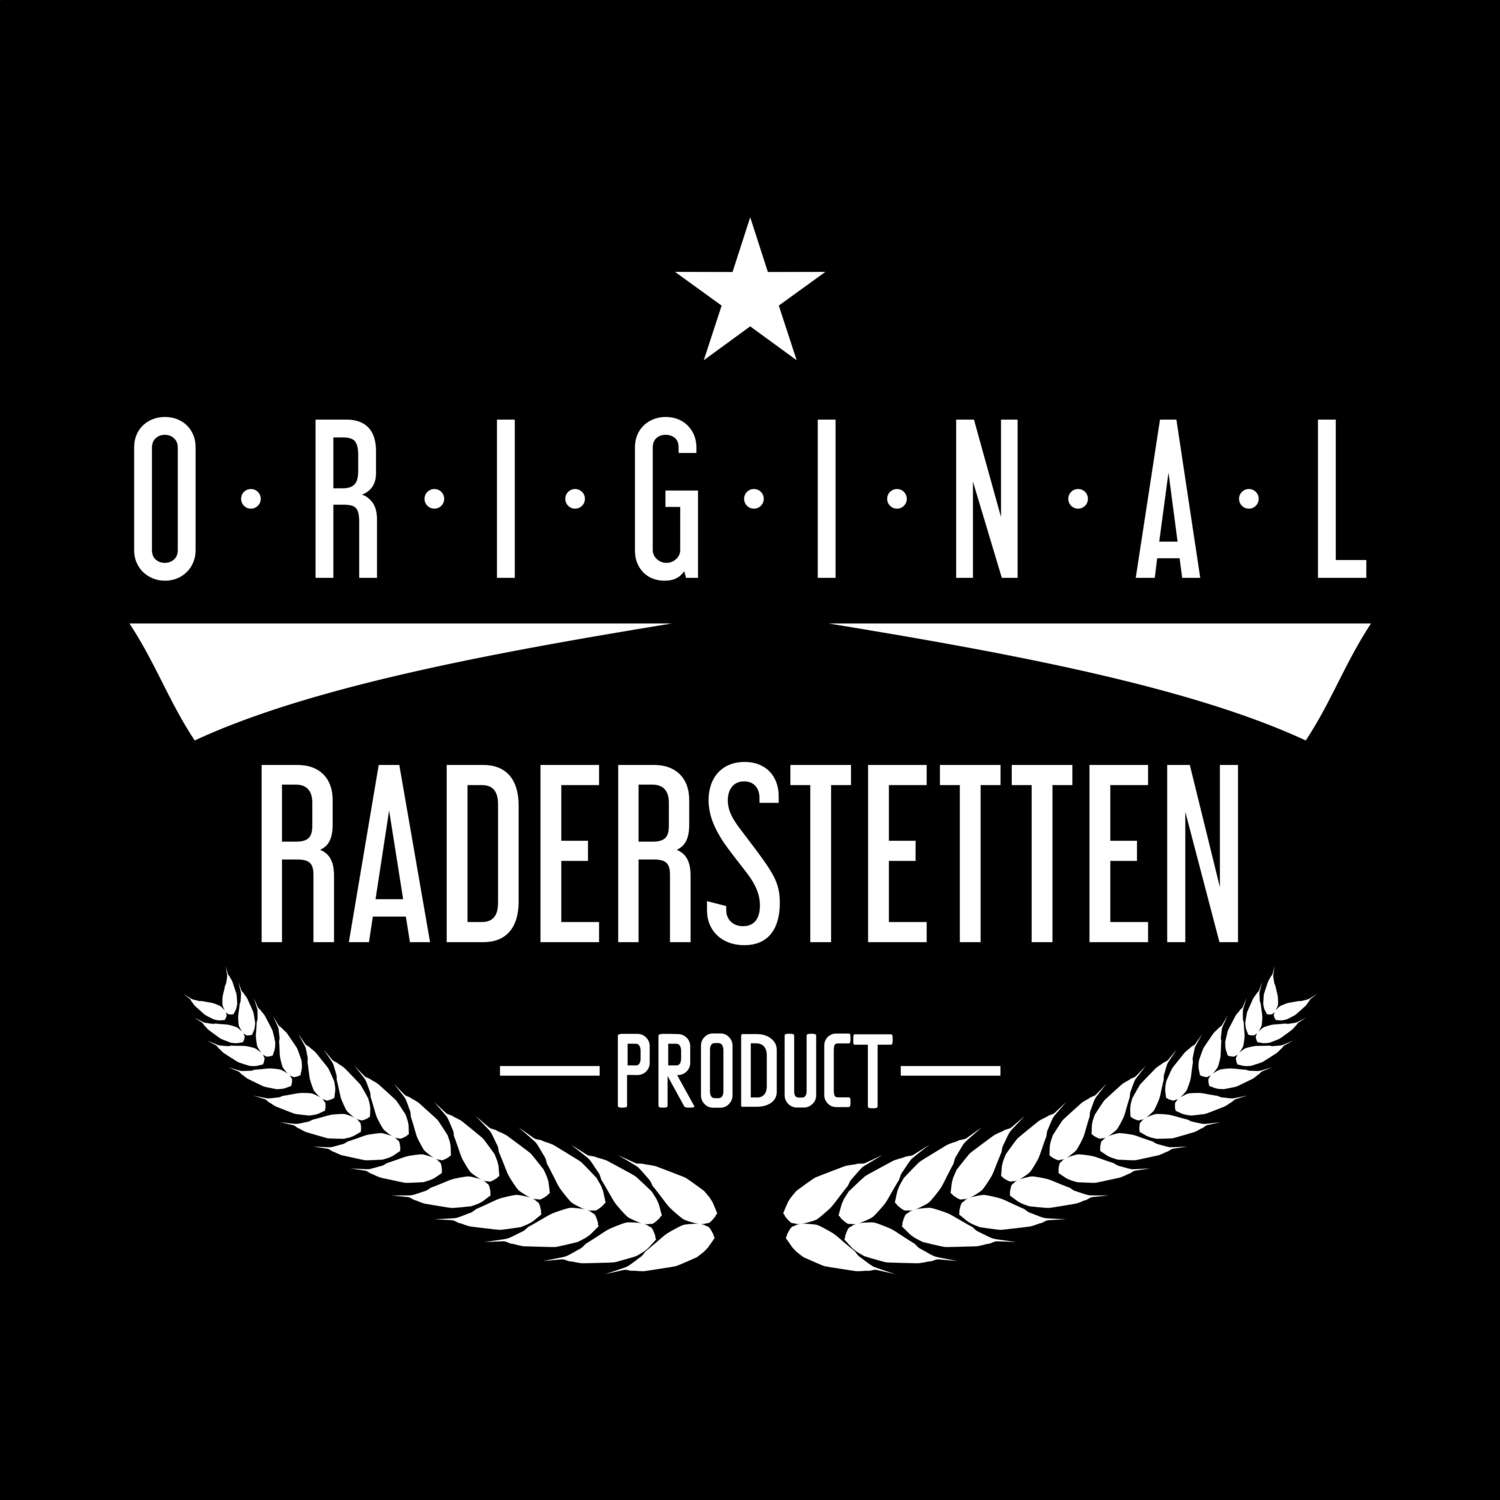 Raderstetten T-Shirt »Original Product«